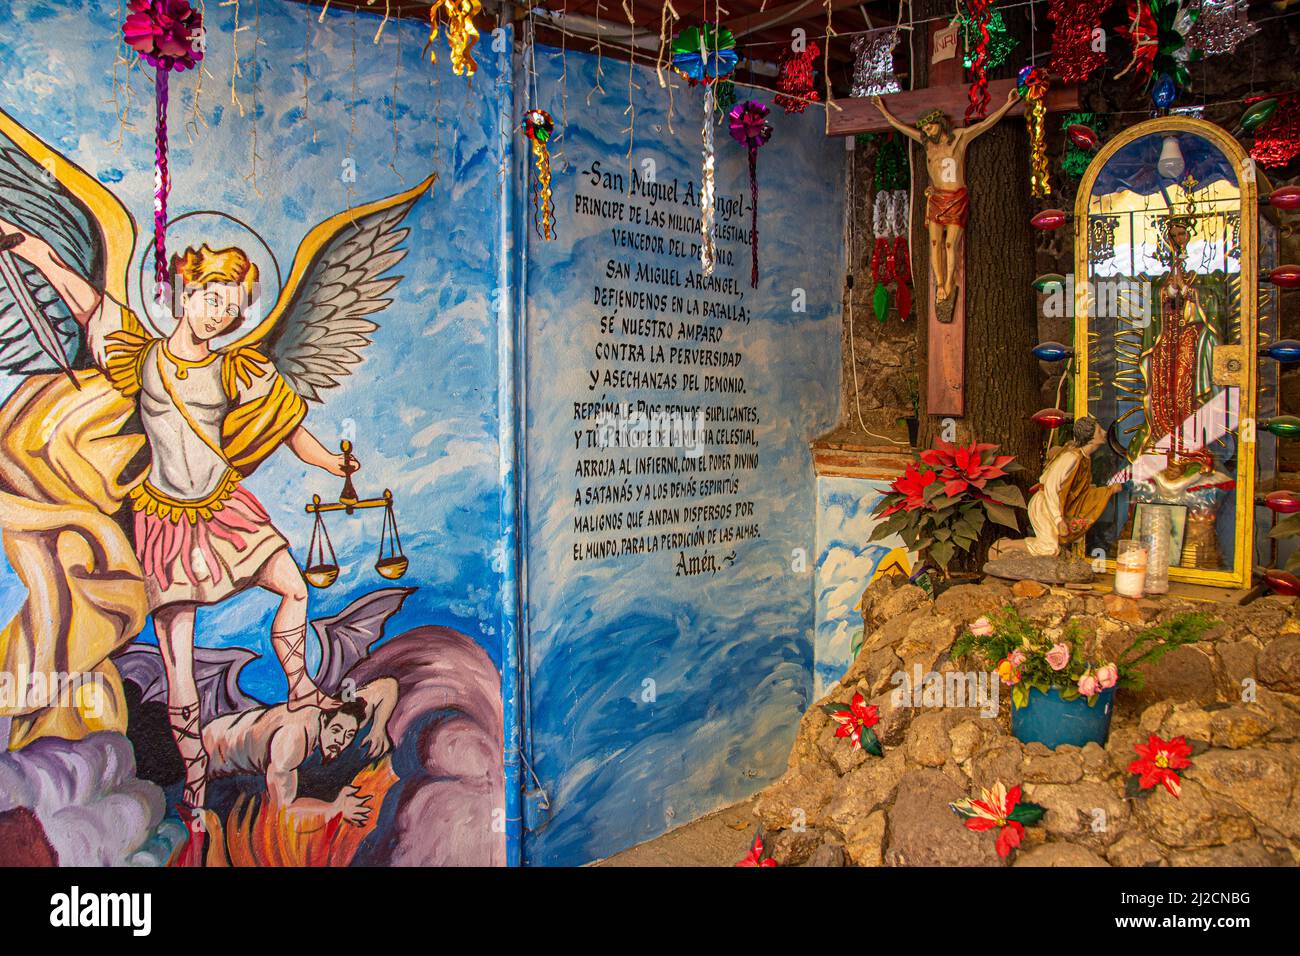 An alter honoring the Virgin Mary/Virgin of Guadalupe. San Miguel de Allende, Guanajuato, Mexico Stock Photo